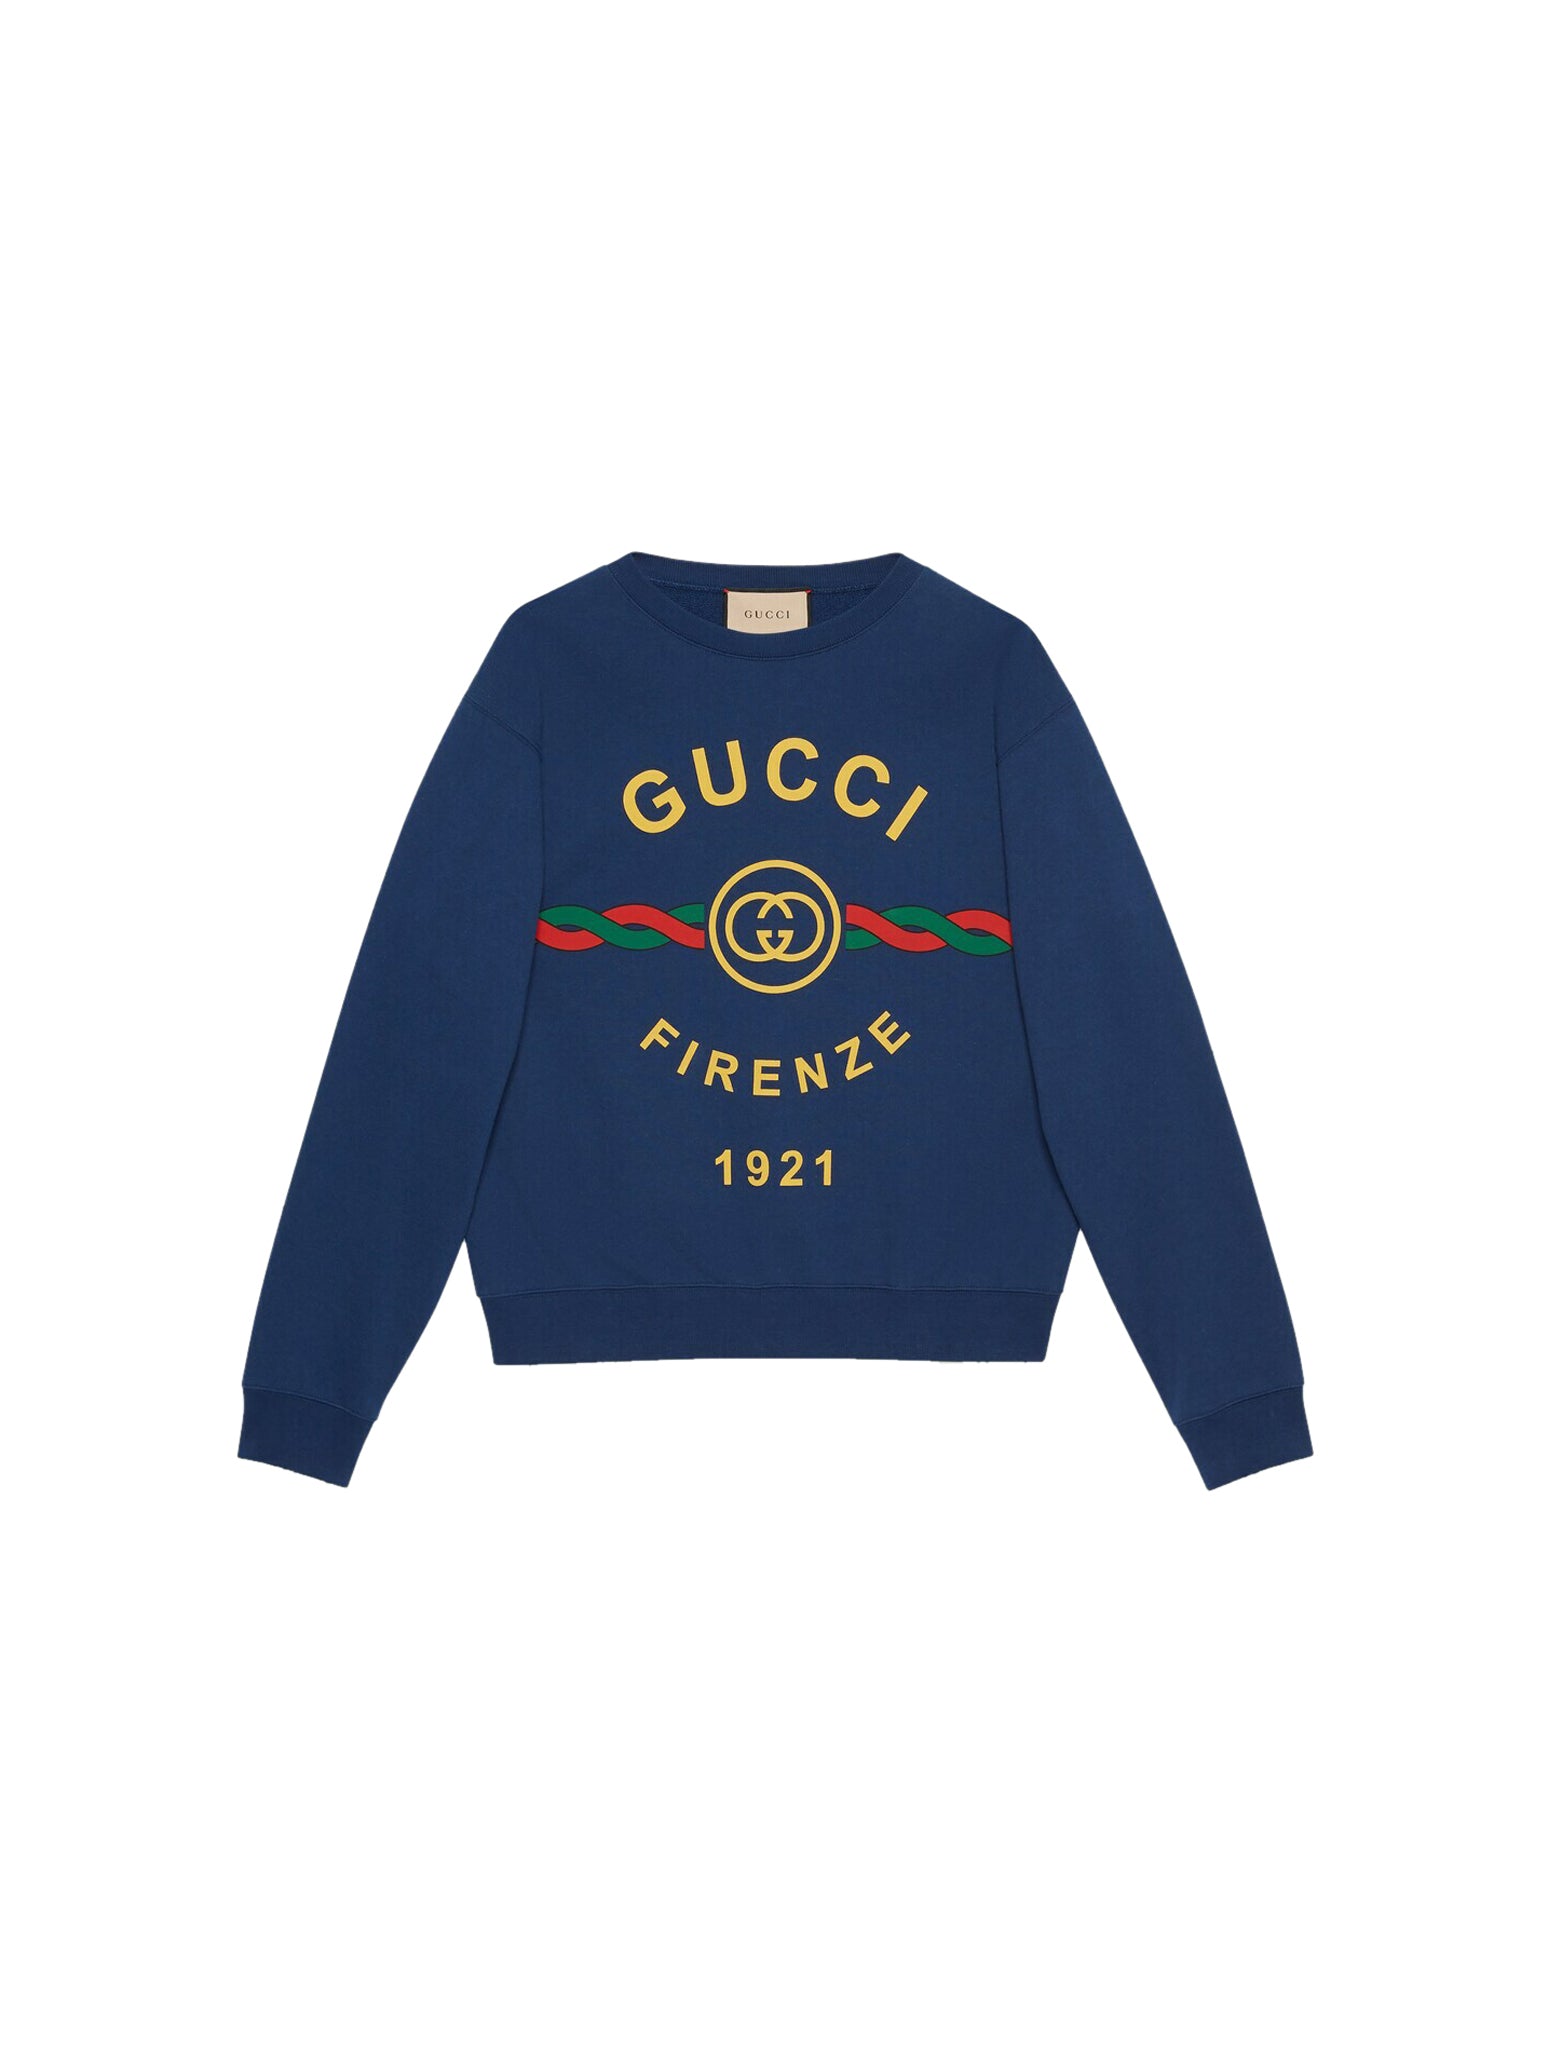 Felpa in cotone `Gucci Firenze 1921`